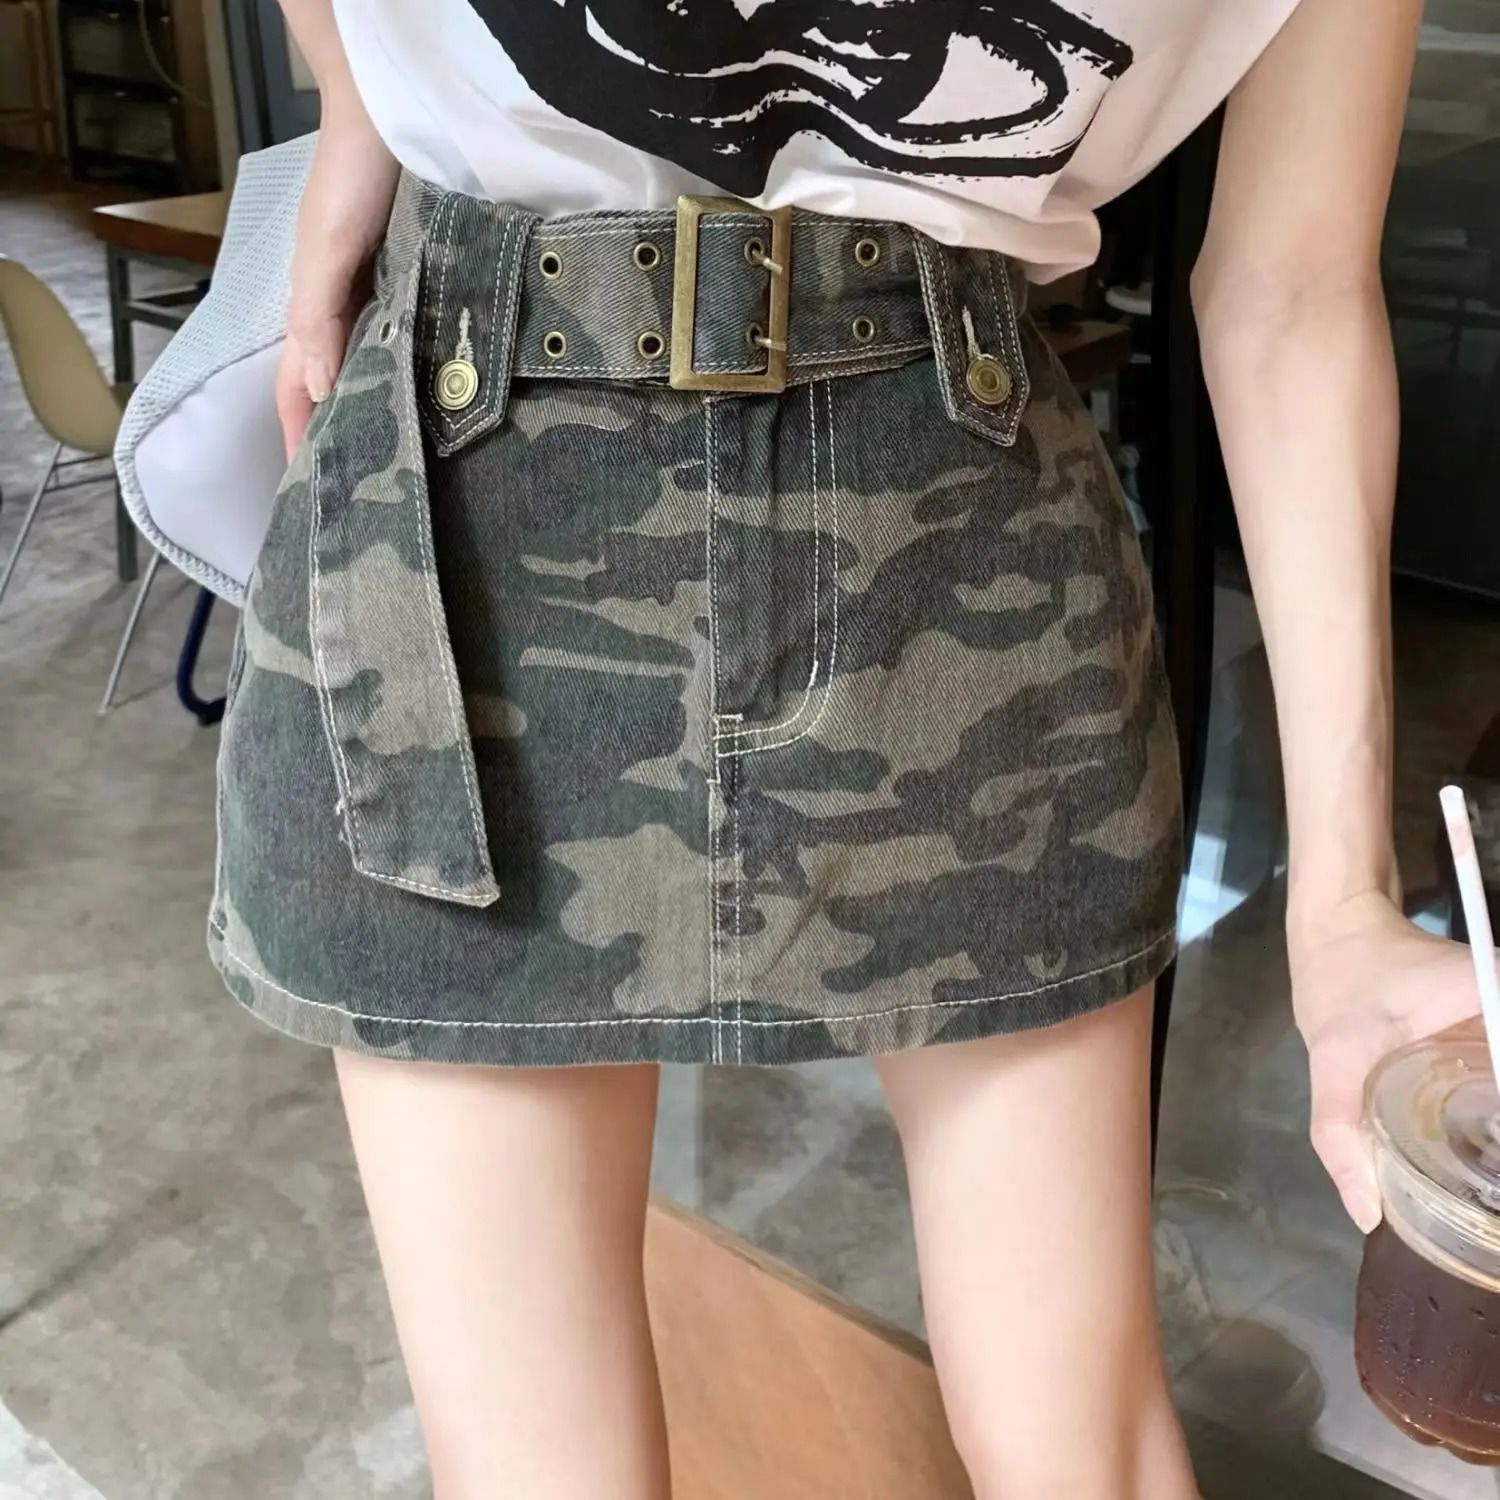 Camouflage Skirt